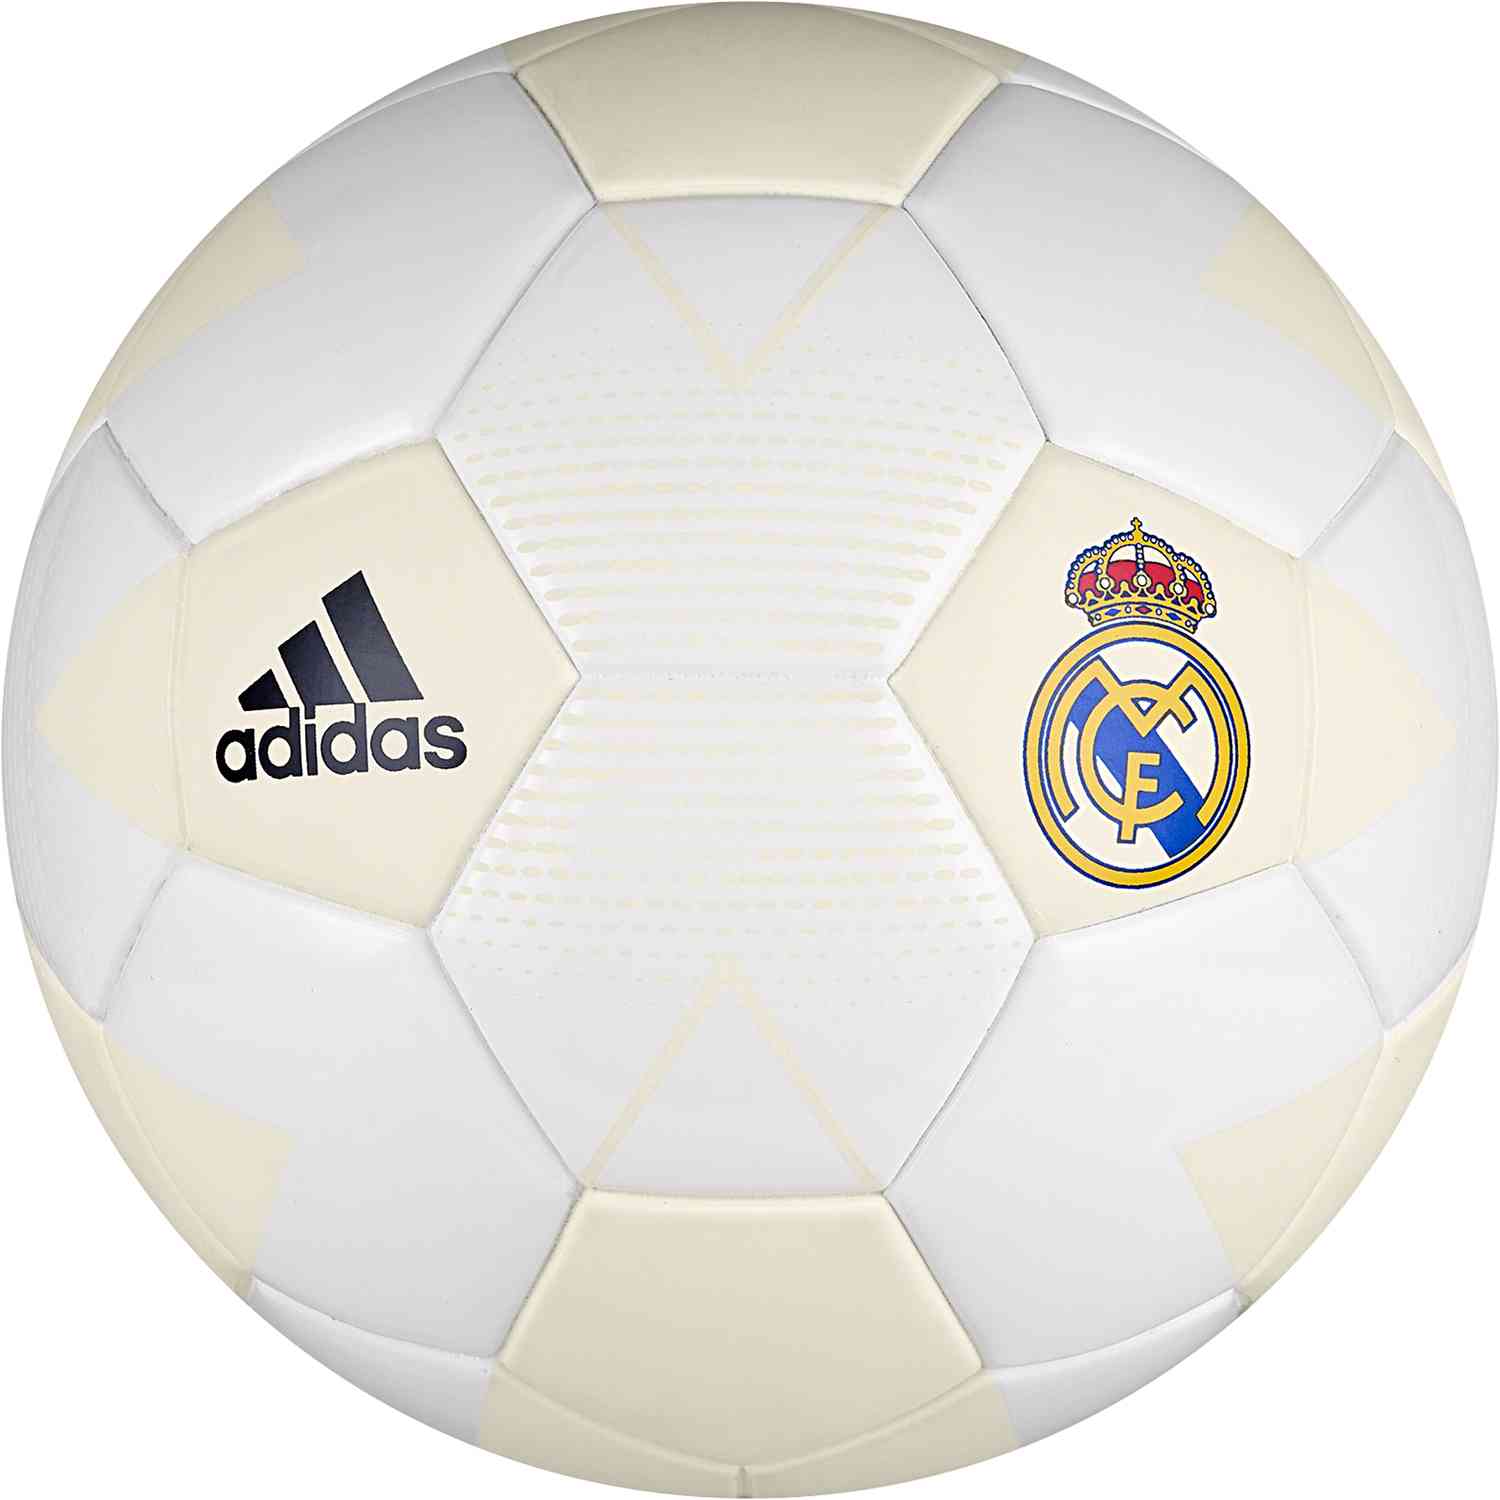 adidas Real Soccer Ball - Cream White/Grey One - SoccerPro